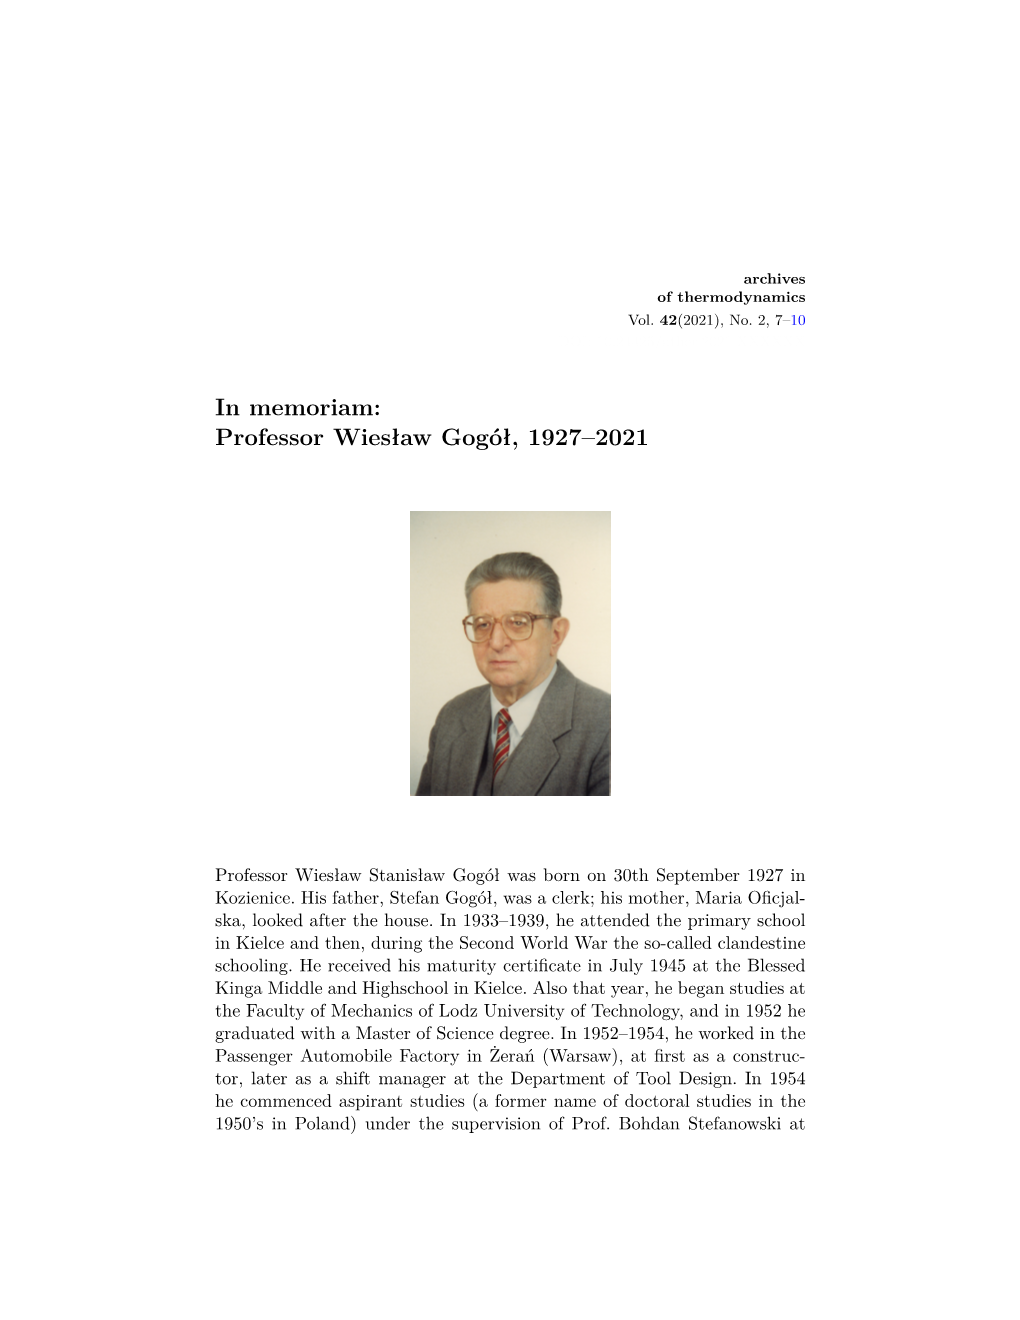 In Memoriam: Professor Wiesław Gogół, 1927–2021